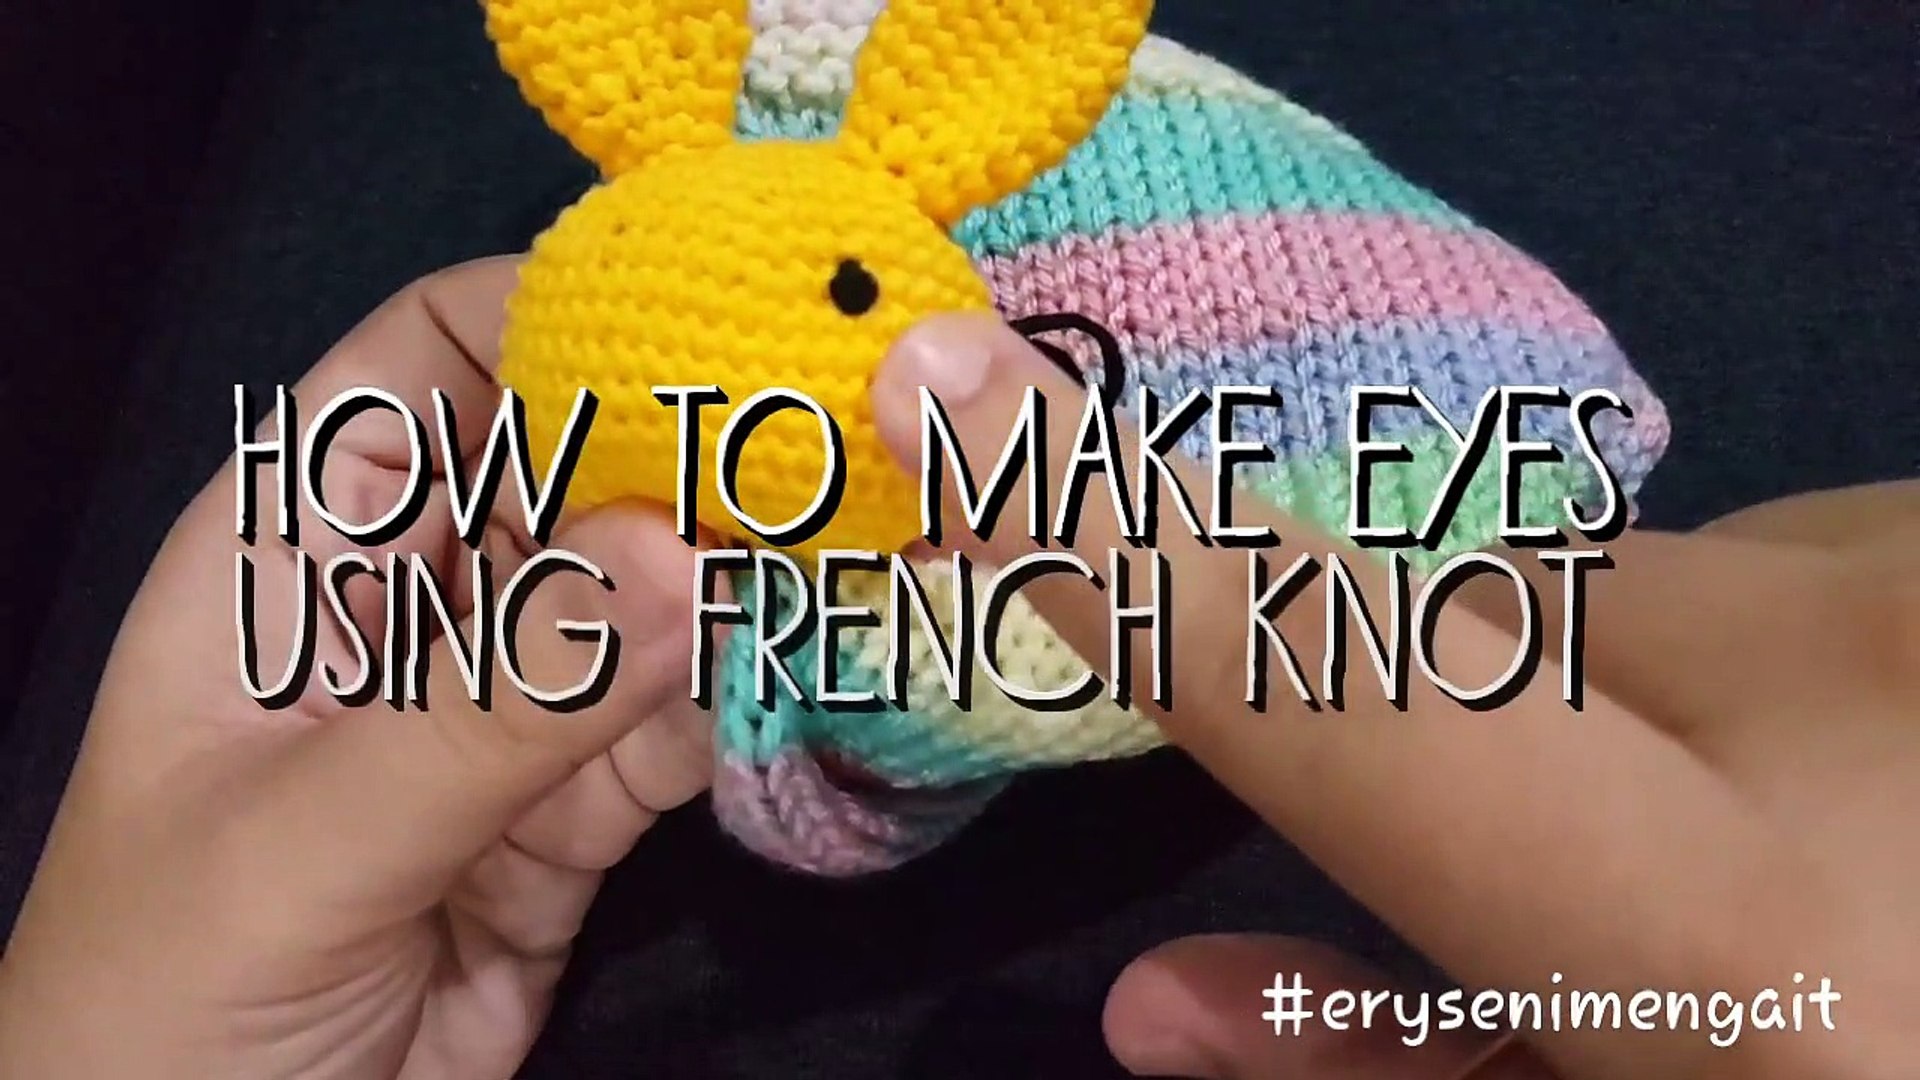 Tutorial: How to make your own felt eyes for amigurumi! #crochet #croc, Amigurumi Tutorial